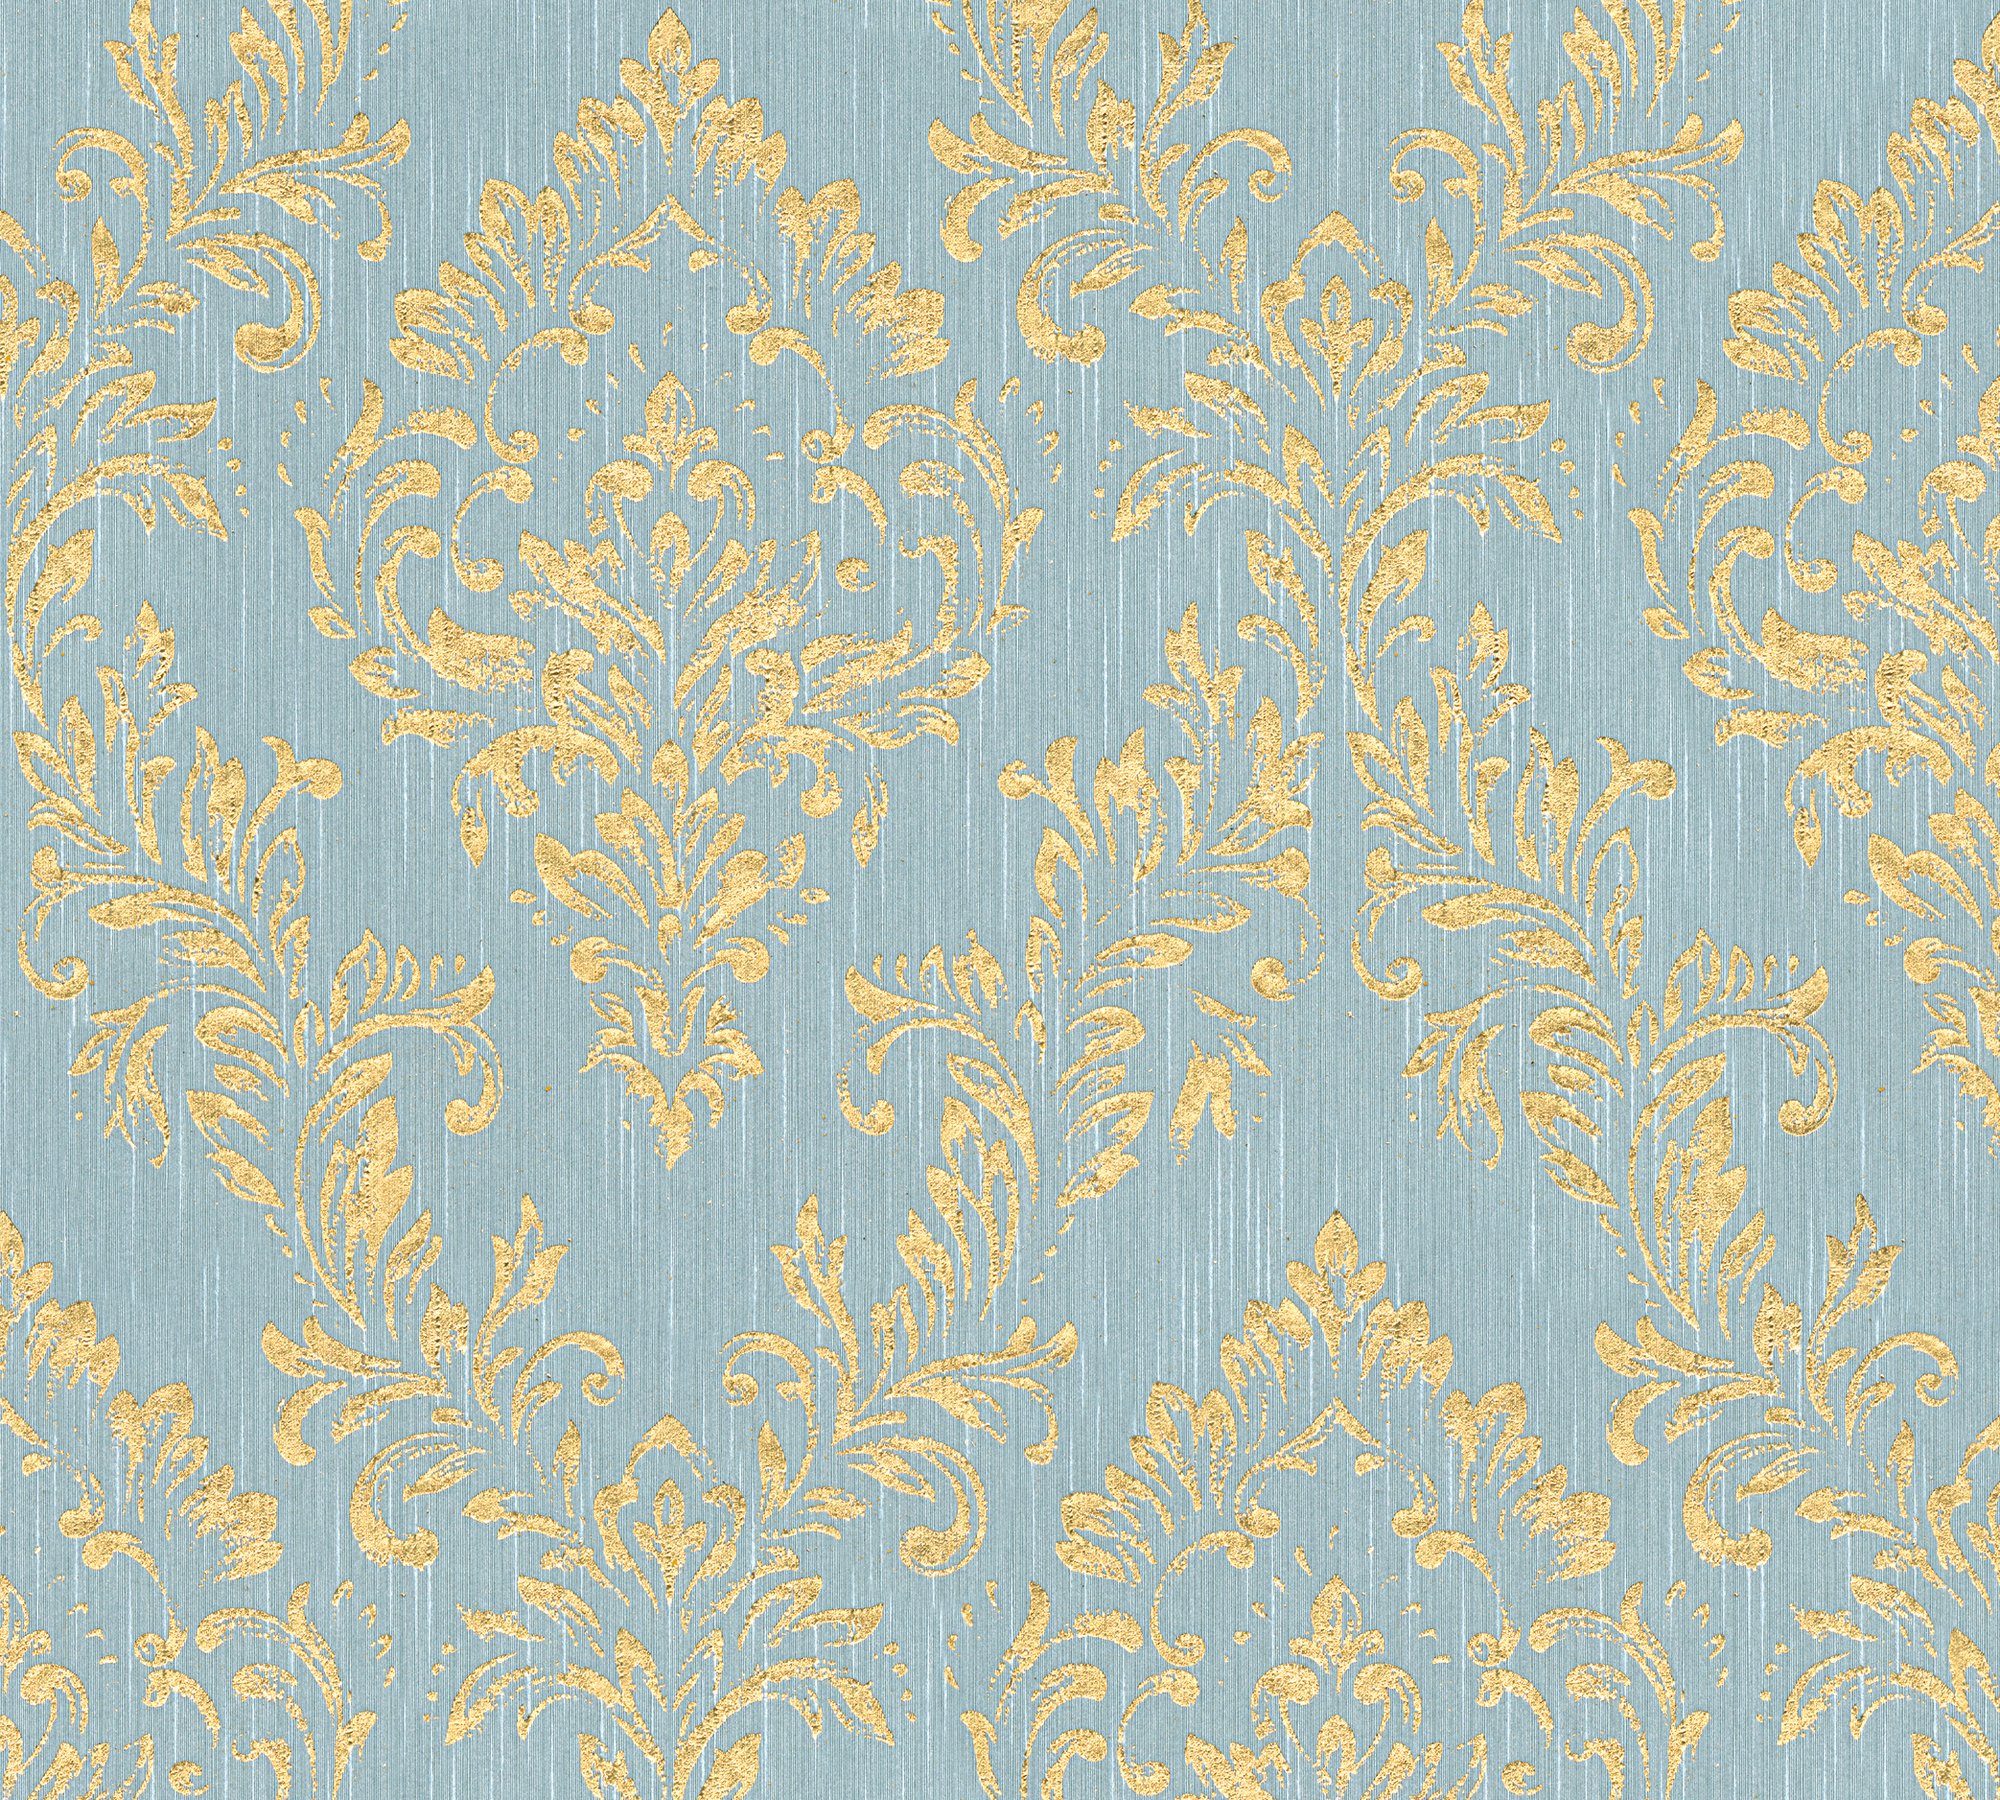 Silk, Barock Barock, Paper glänzend, Metallic matt, Création gold/blau/grün Architects Textiltapete samtig, Ornament A.S. Tapete